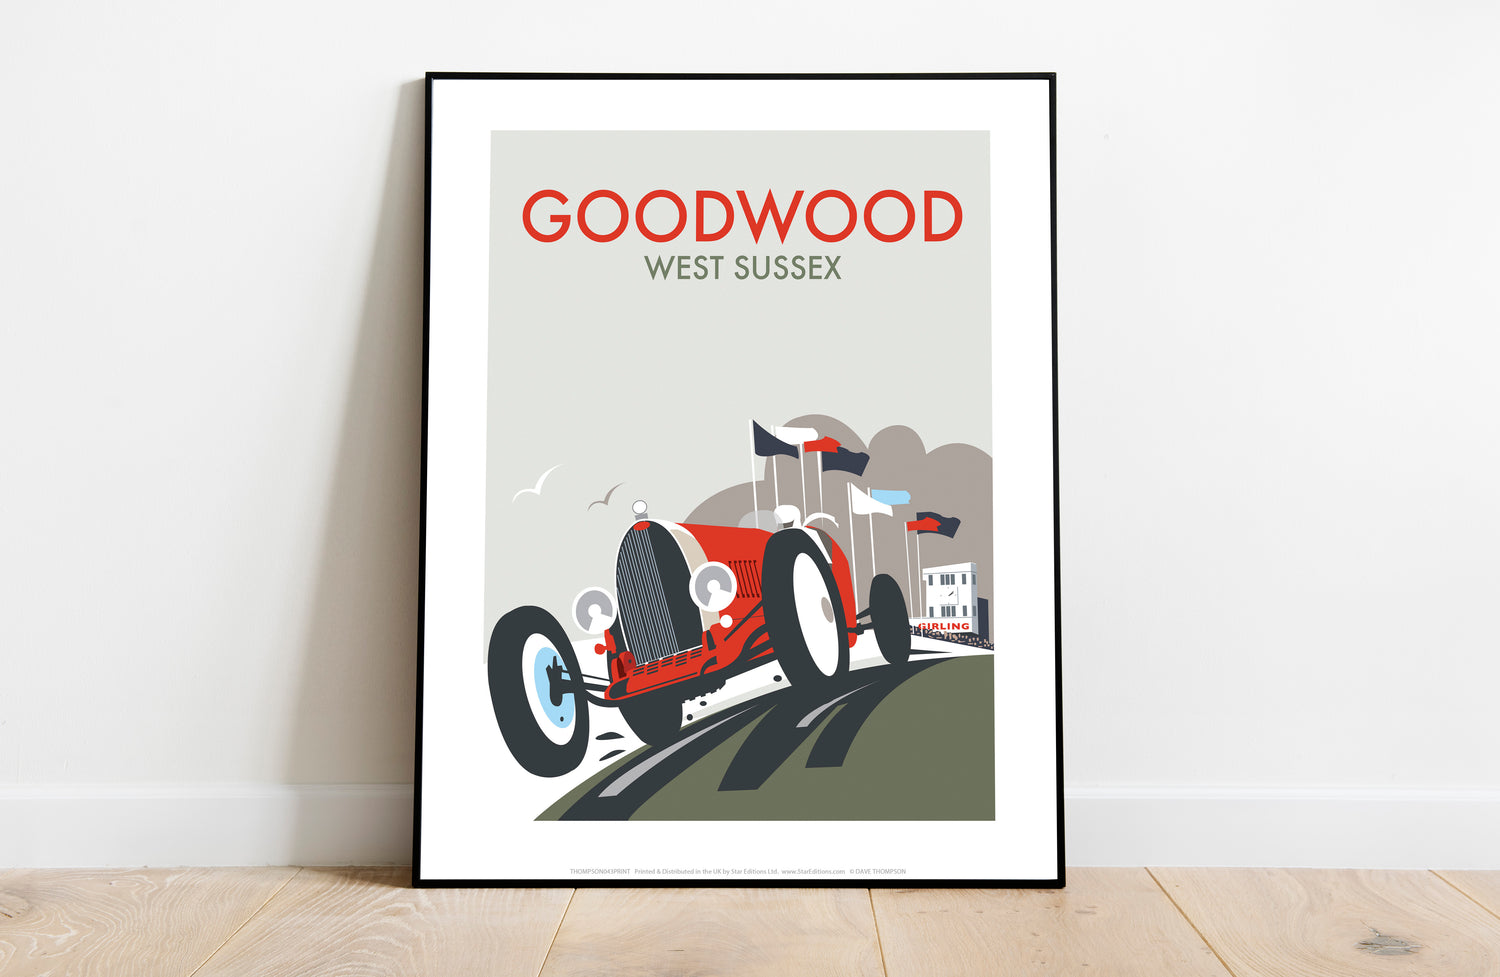 Goodwood, West Sussex - Art Print